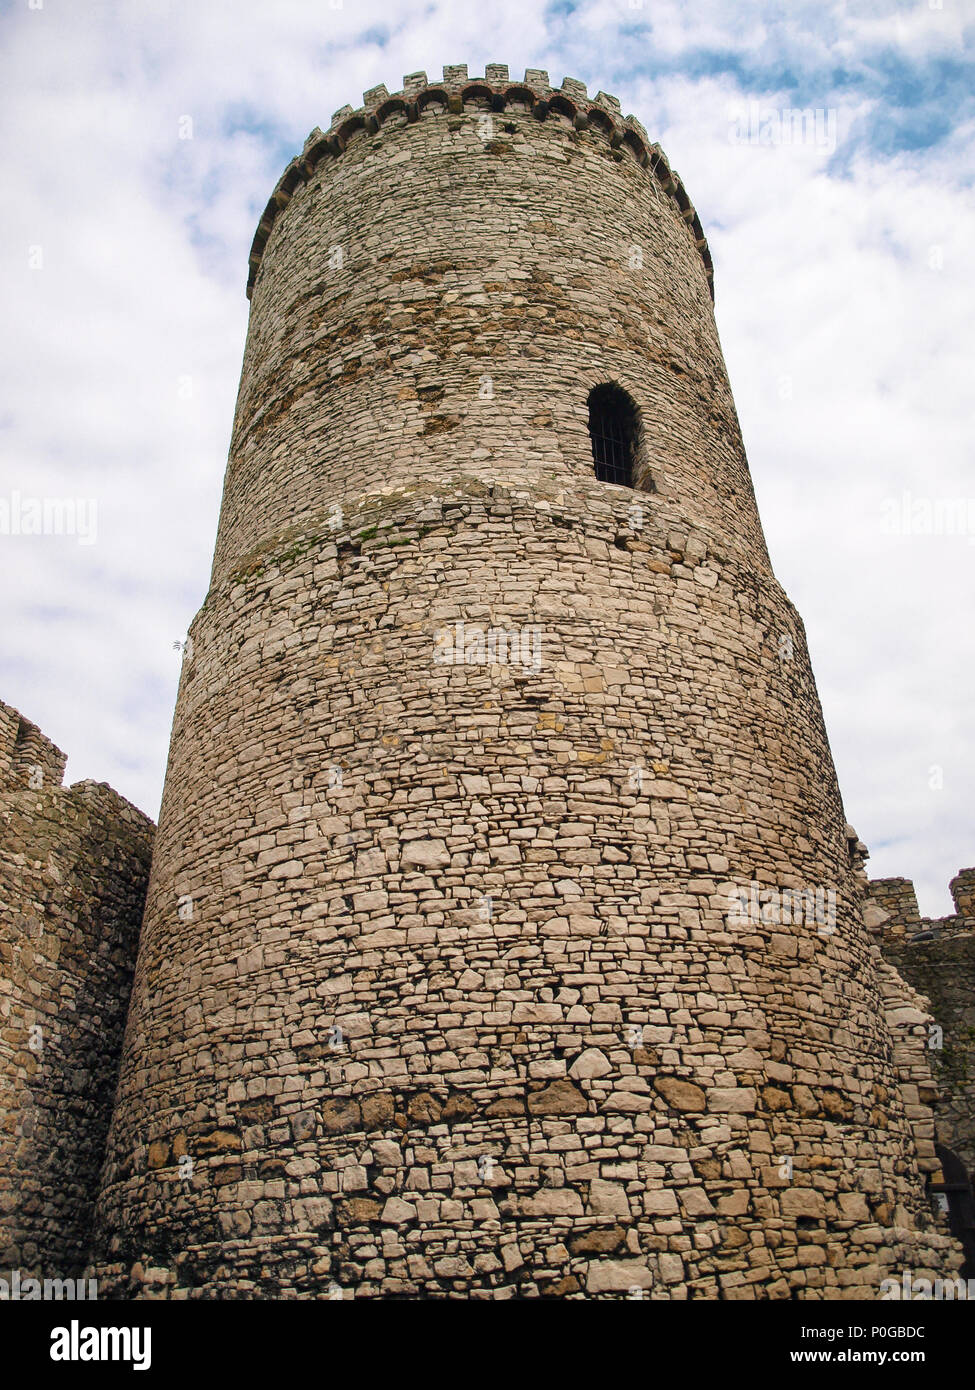 Bedzin Castle - a stone castle in Poland Stock Photo